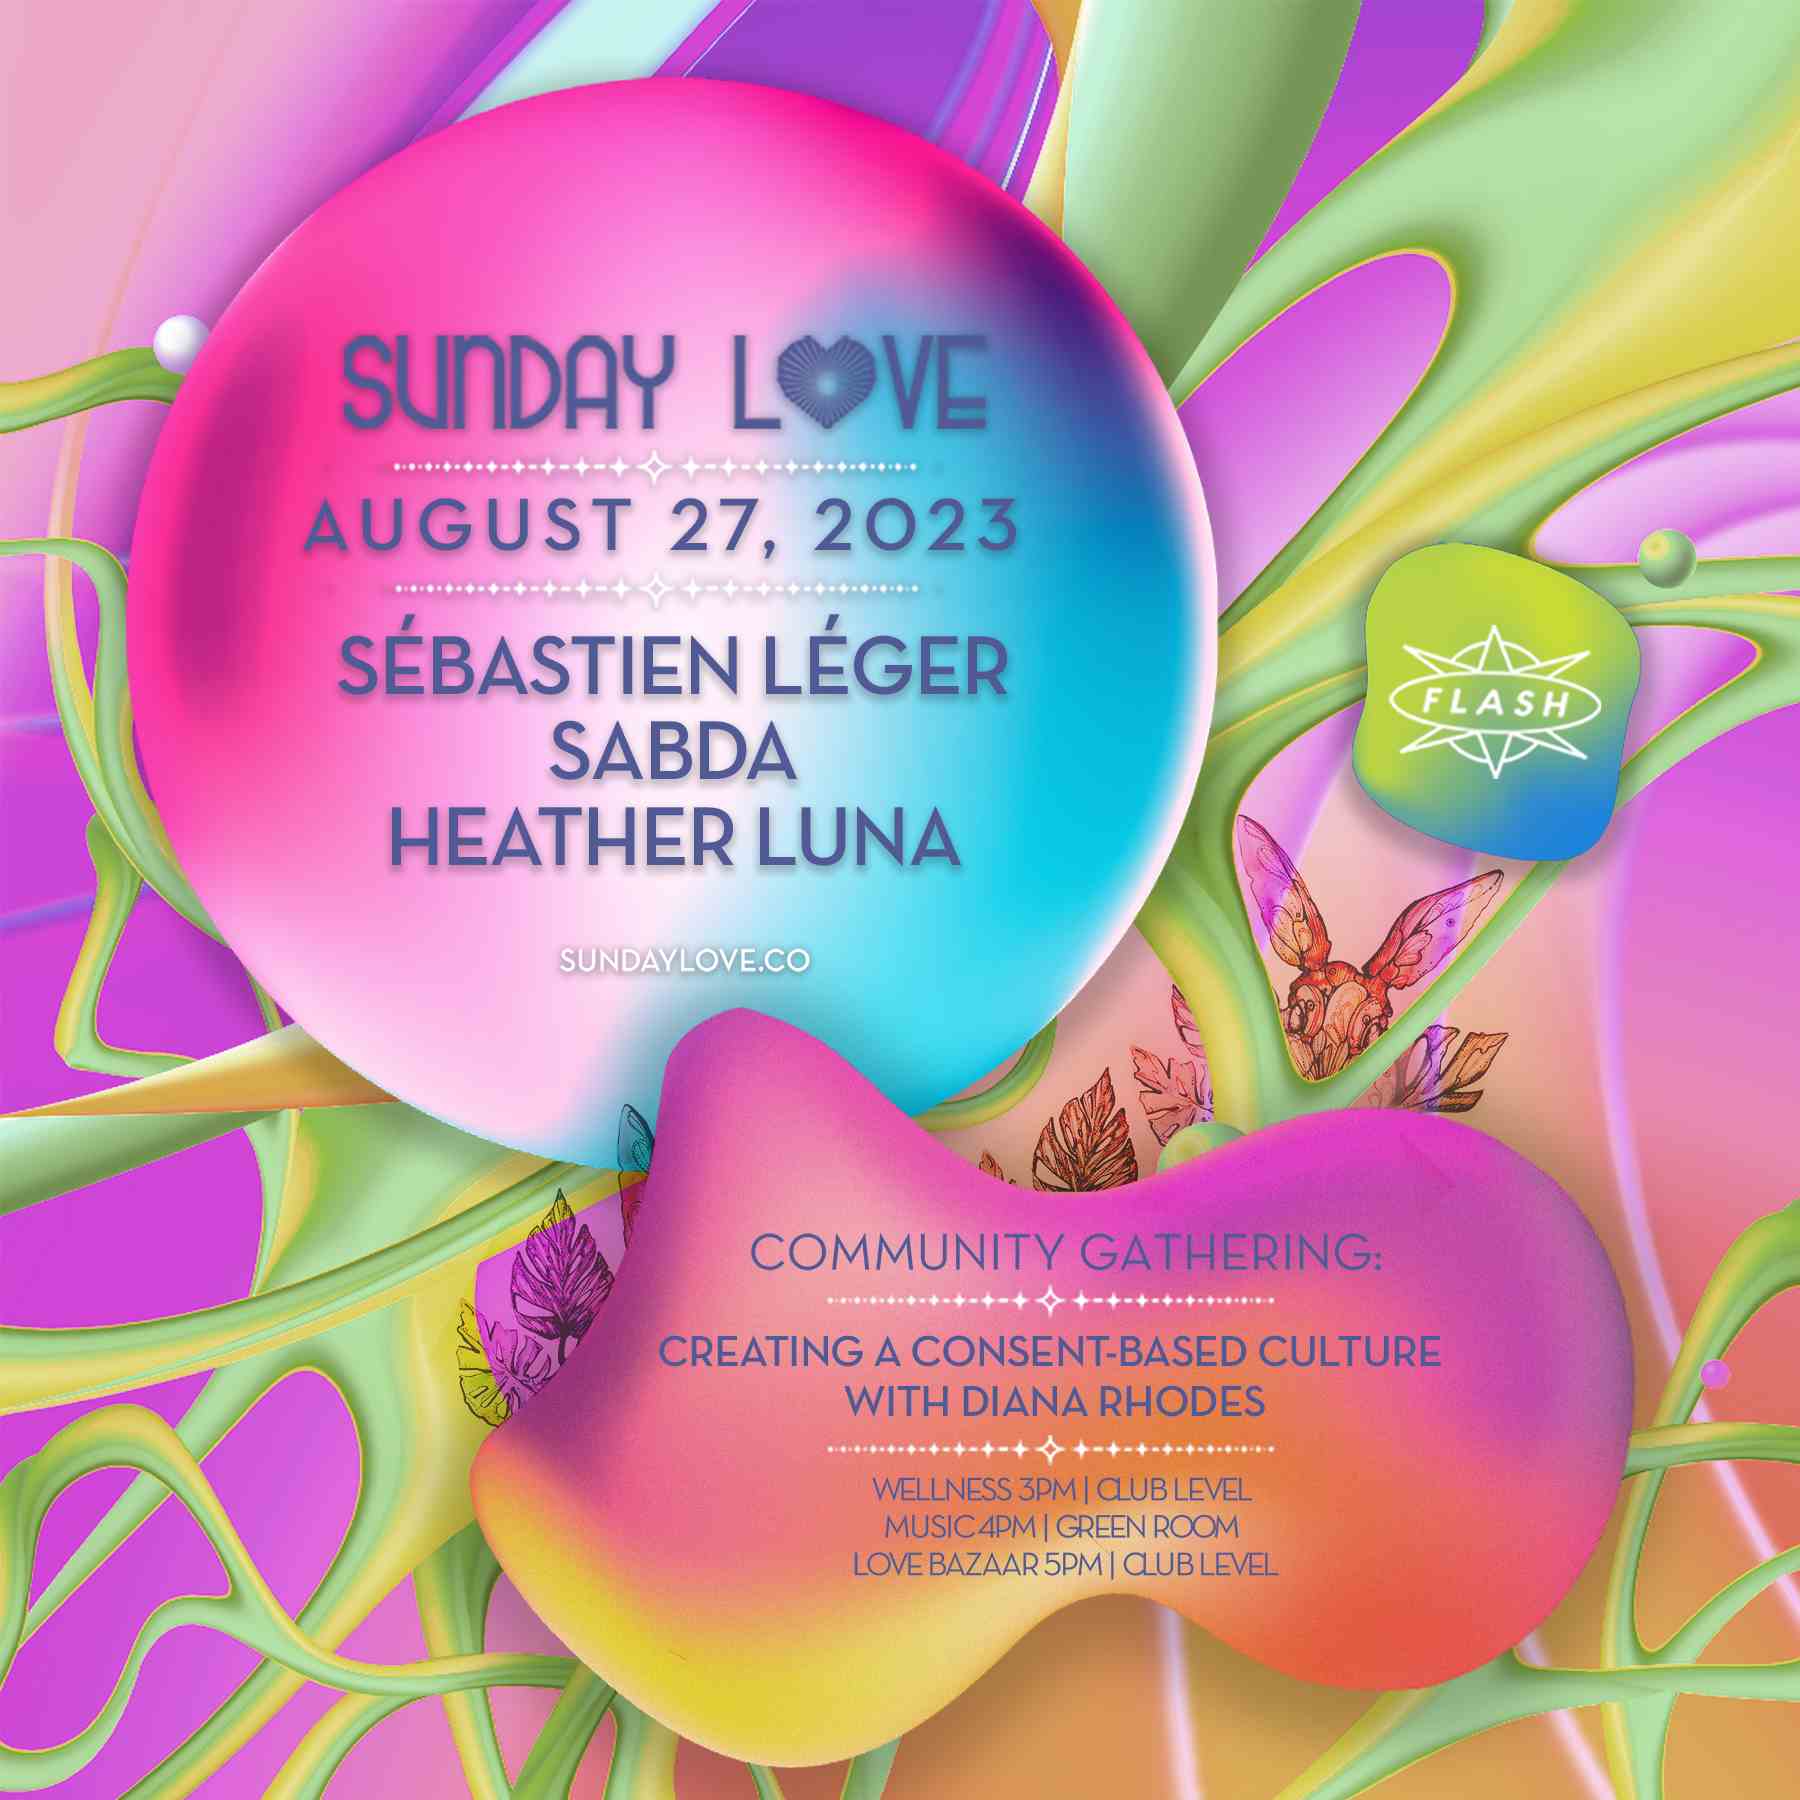 Sunday Love: Sébastien Léger - Sabda - Heather Luna event flyer